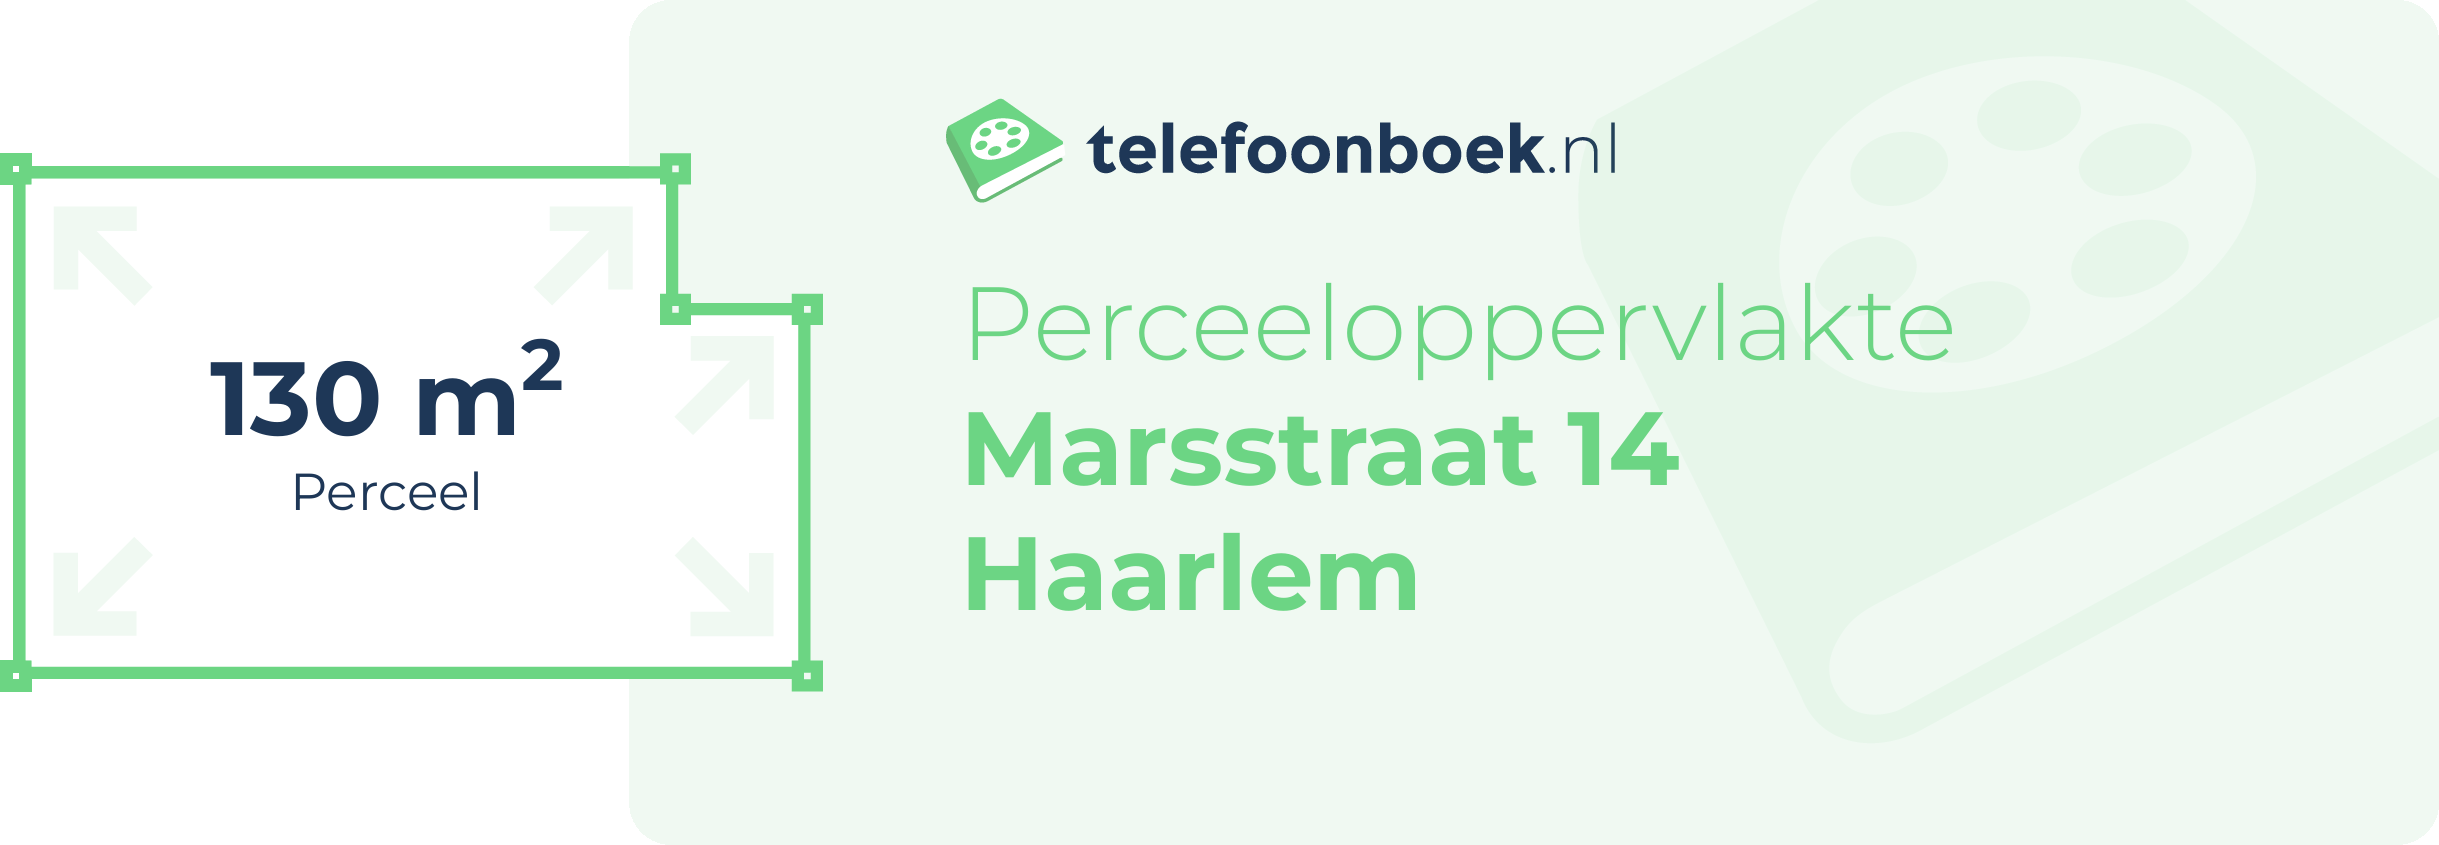 Perceeloppervlakte Marsstraat 14 Haarlem